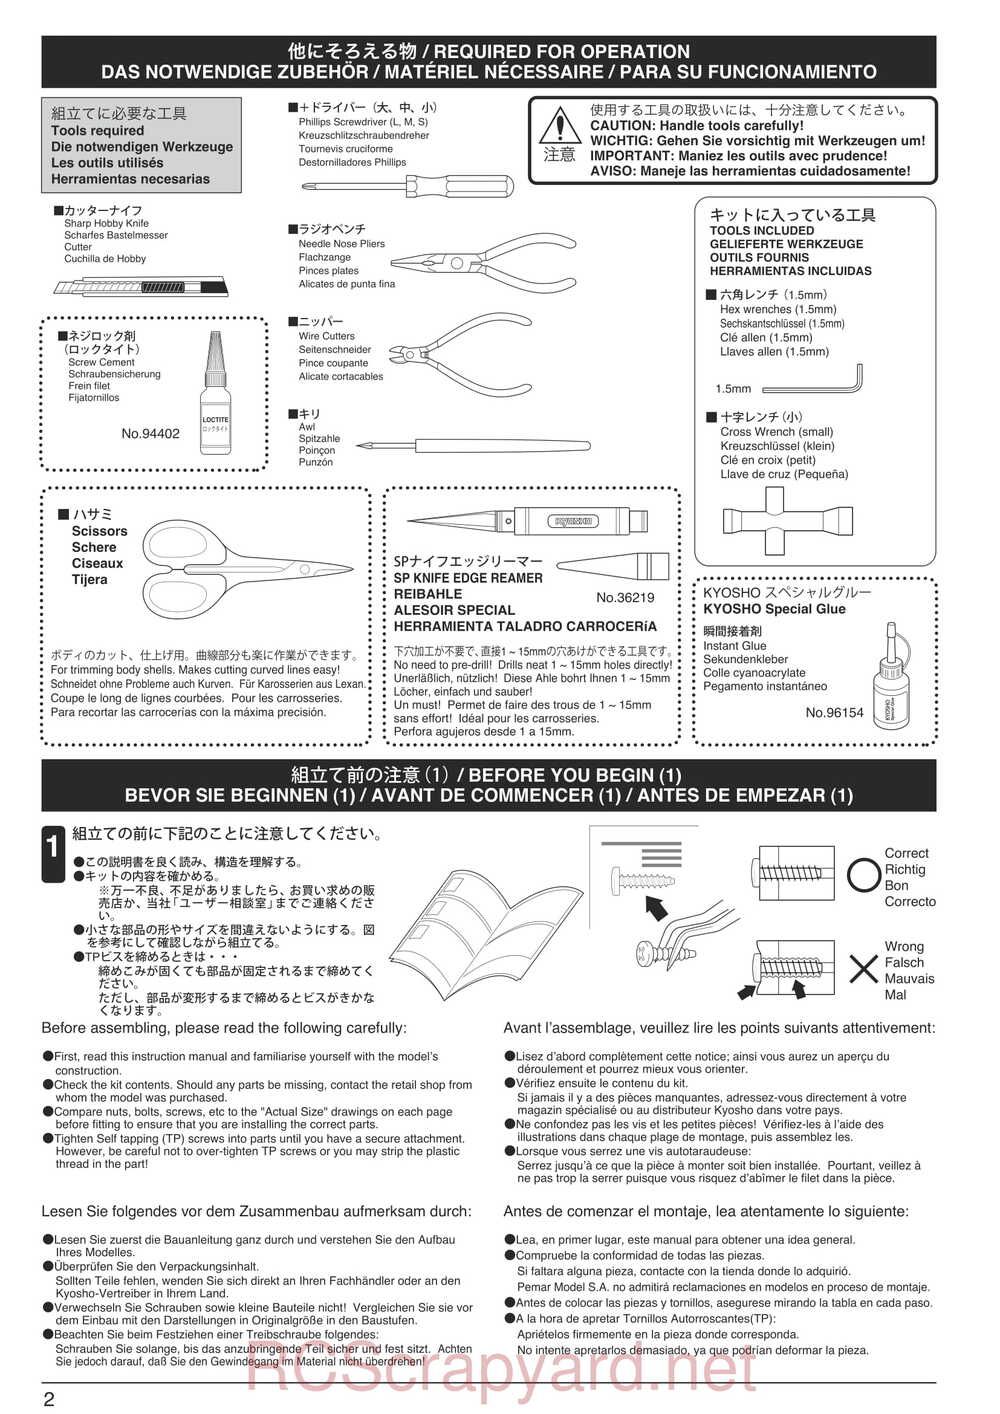 Kyosho - 30930T1 - EP Fazer KOBRA - Manual - Page 02